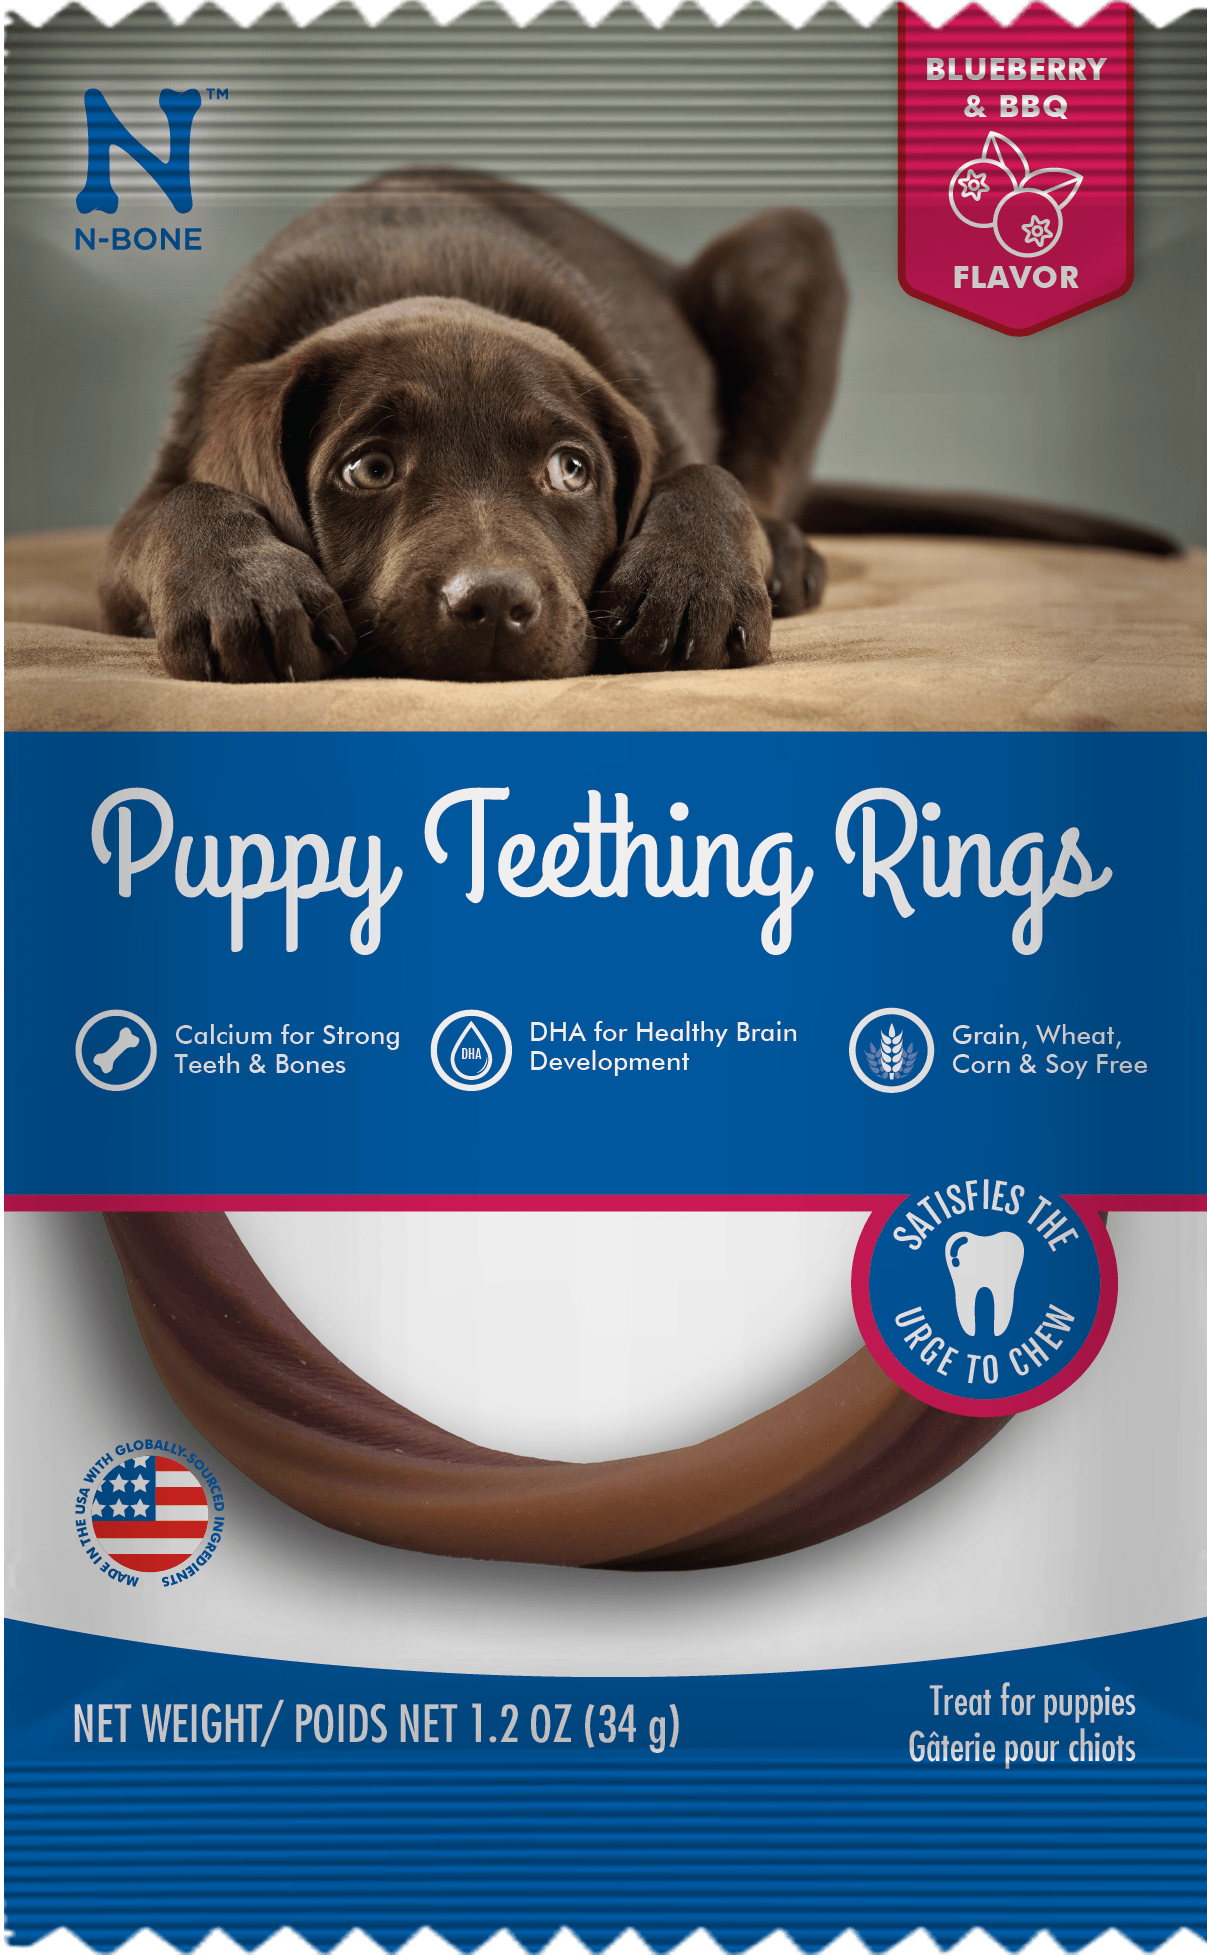 N-Bone® Puppy Teething Rings Grain-Free Blueberry & BBQ Flavor